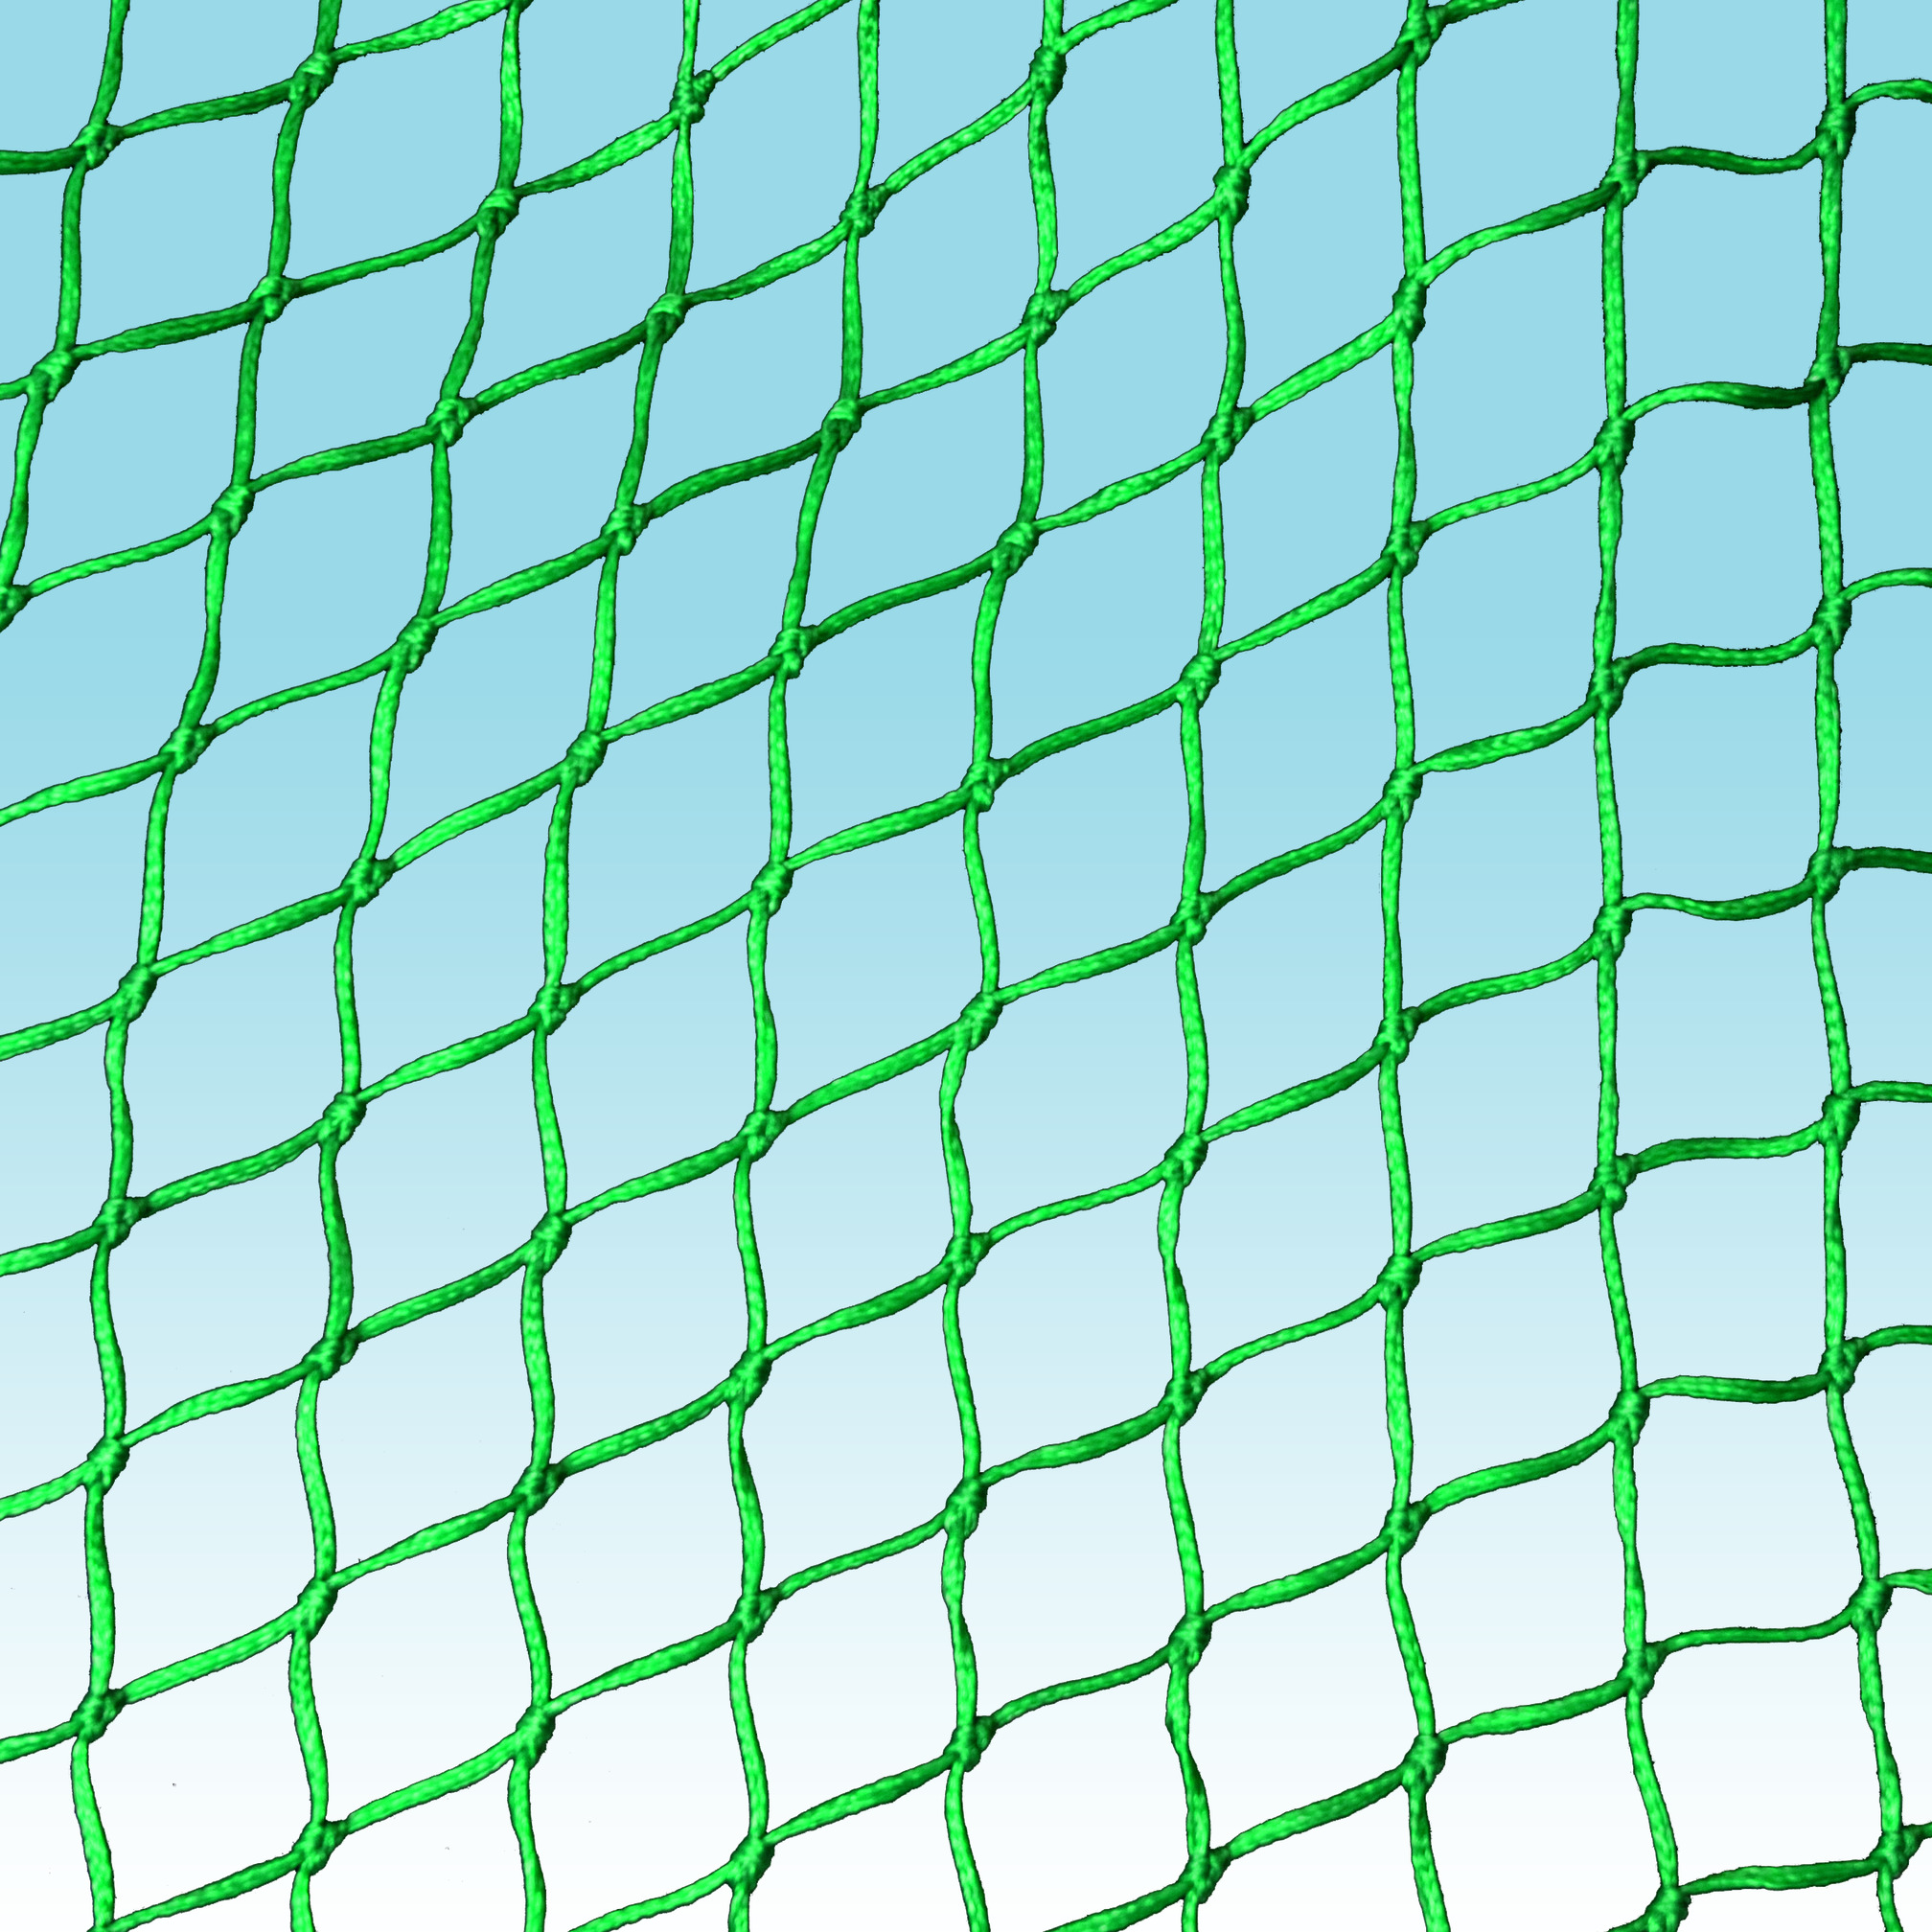 Feldhockey-Tornetz, Maschenweite 2,5 cm